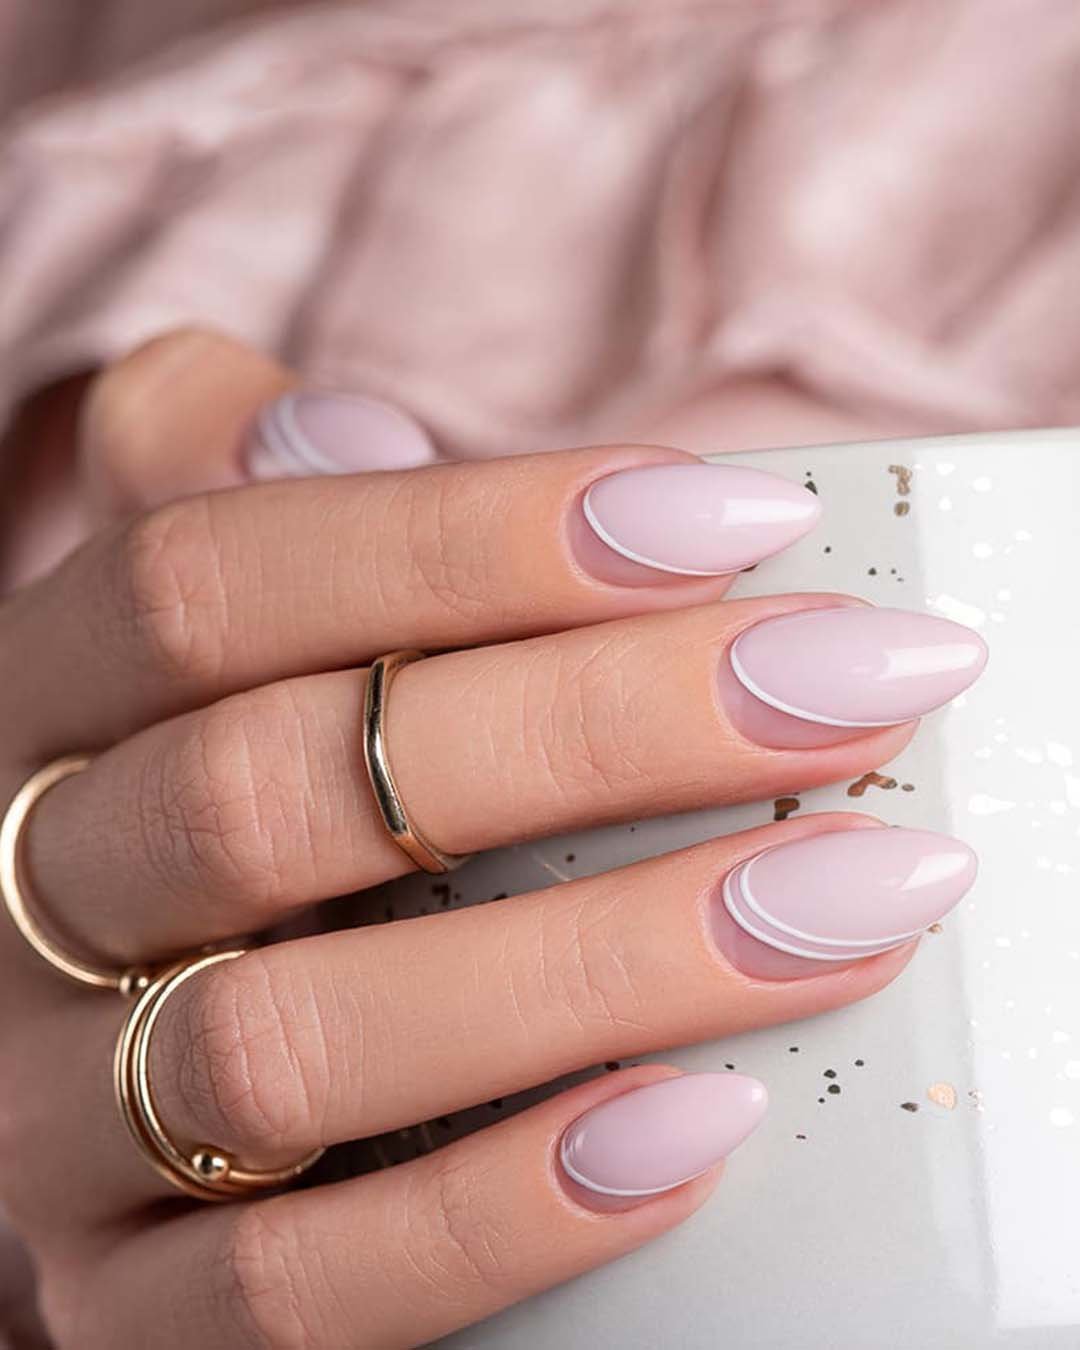 pinterest nails pink with white stripes indigonails